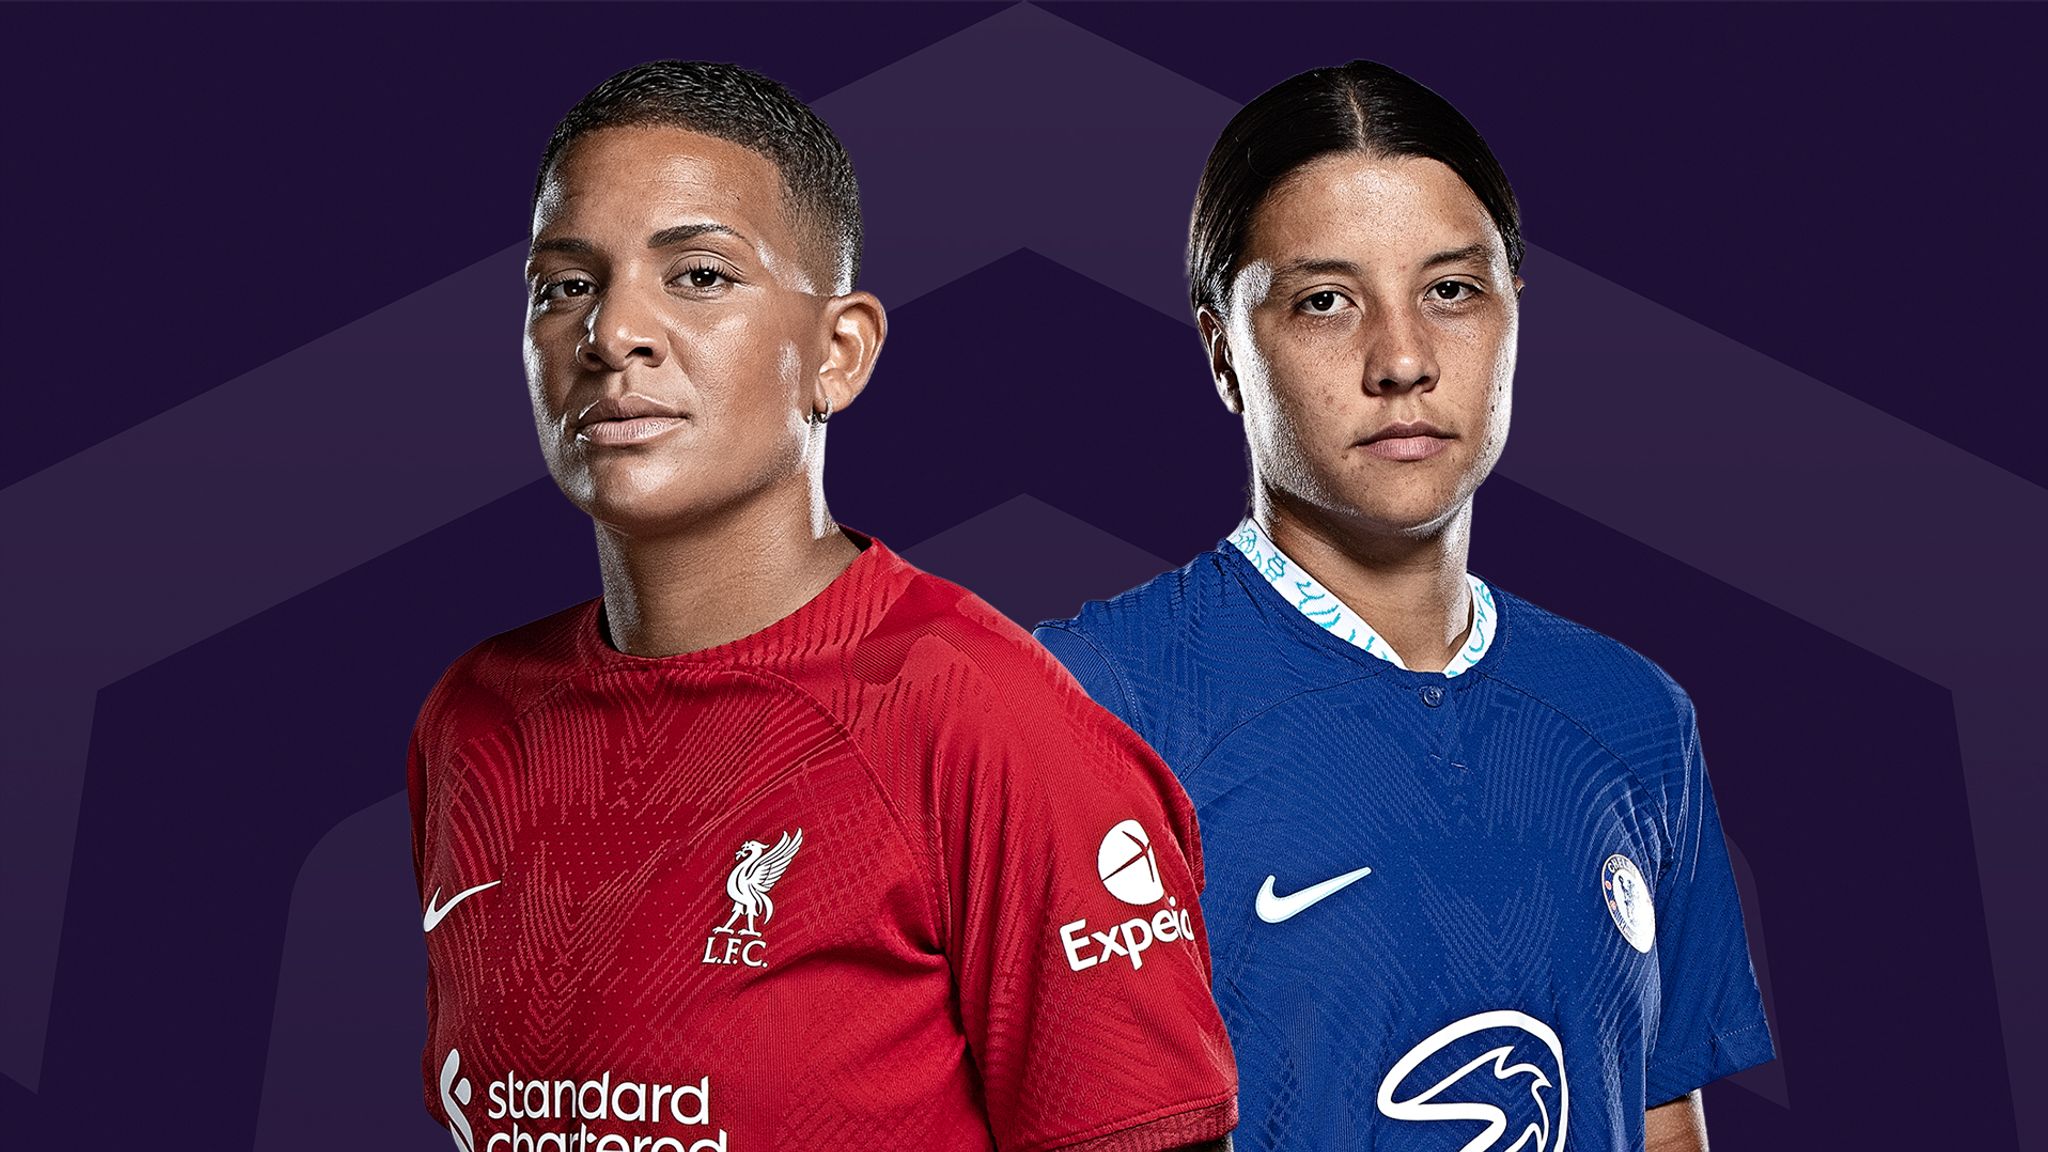 WSL Liverpool vs Chelsea to be shown live on Sky Sports as Womens Super League season begins Football News Sky Sports